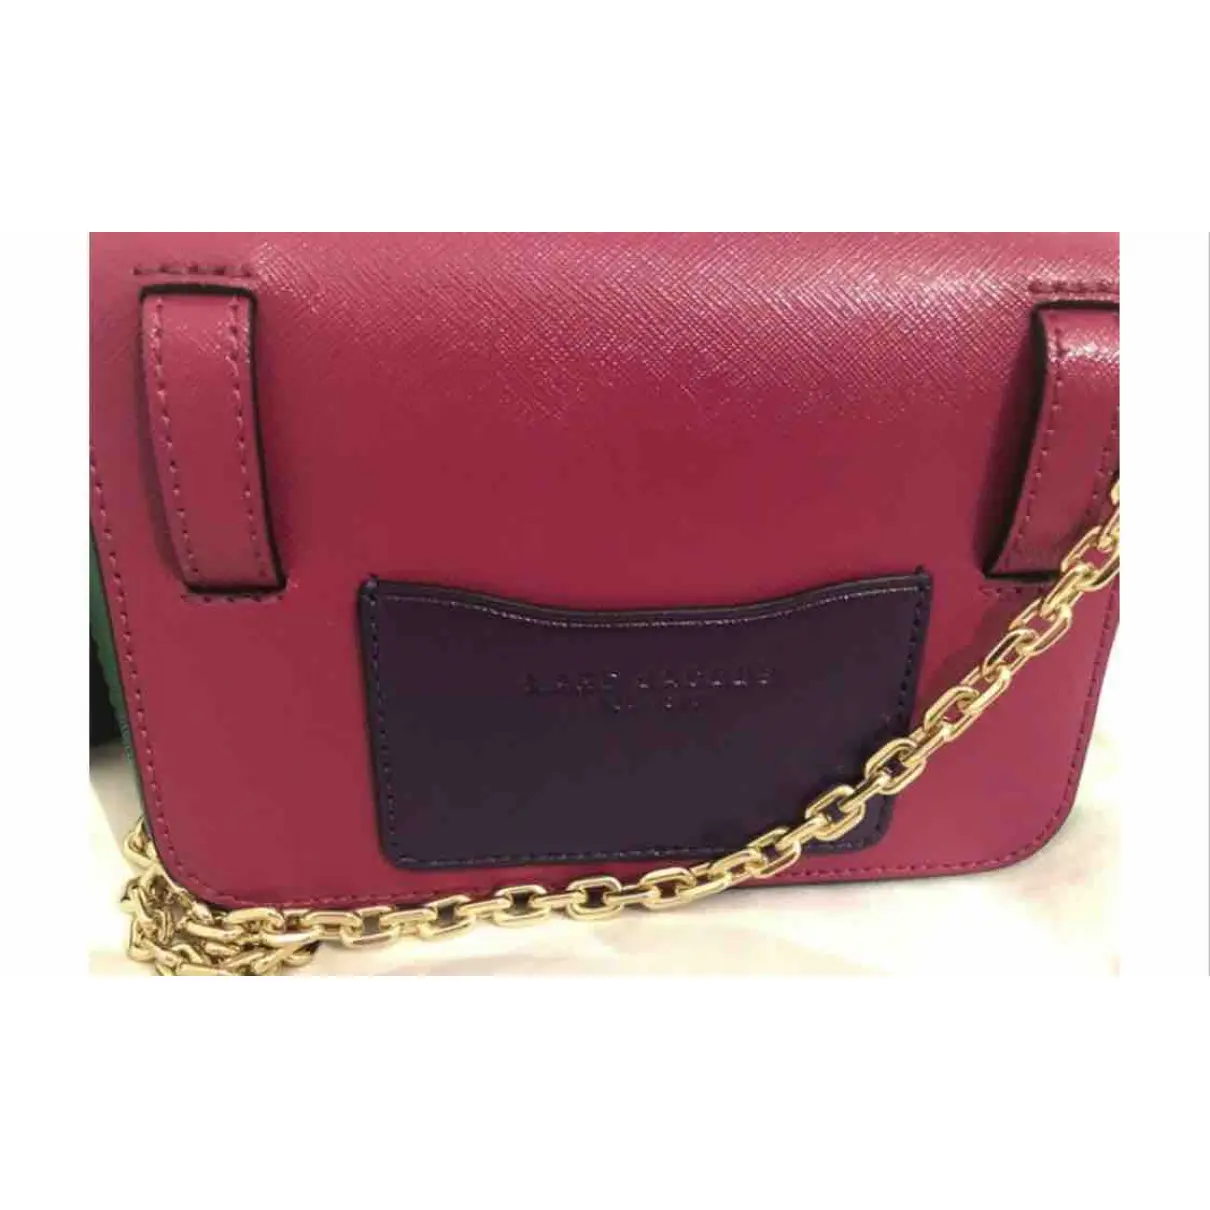 Buy Marc Jacobs Snapshot leather clutch bag online